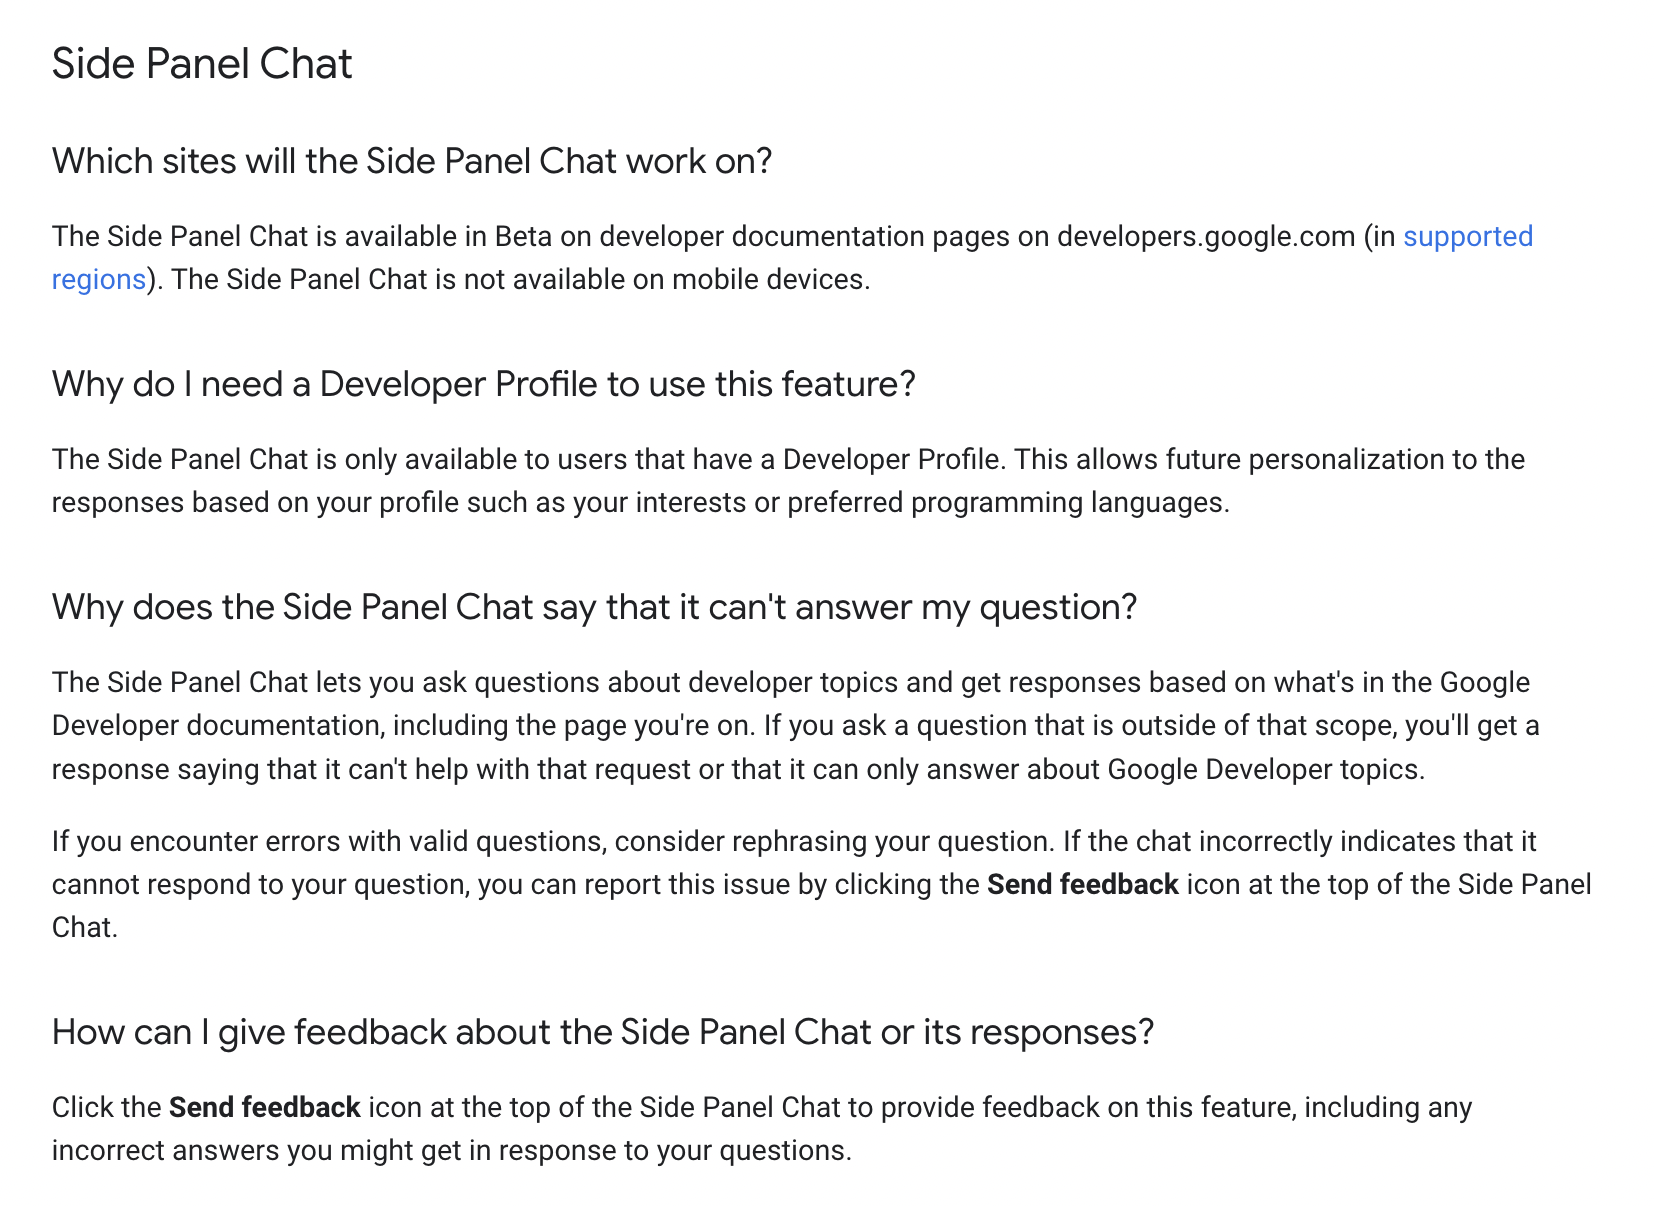 side panel chat documentation